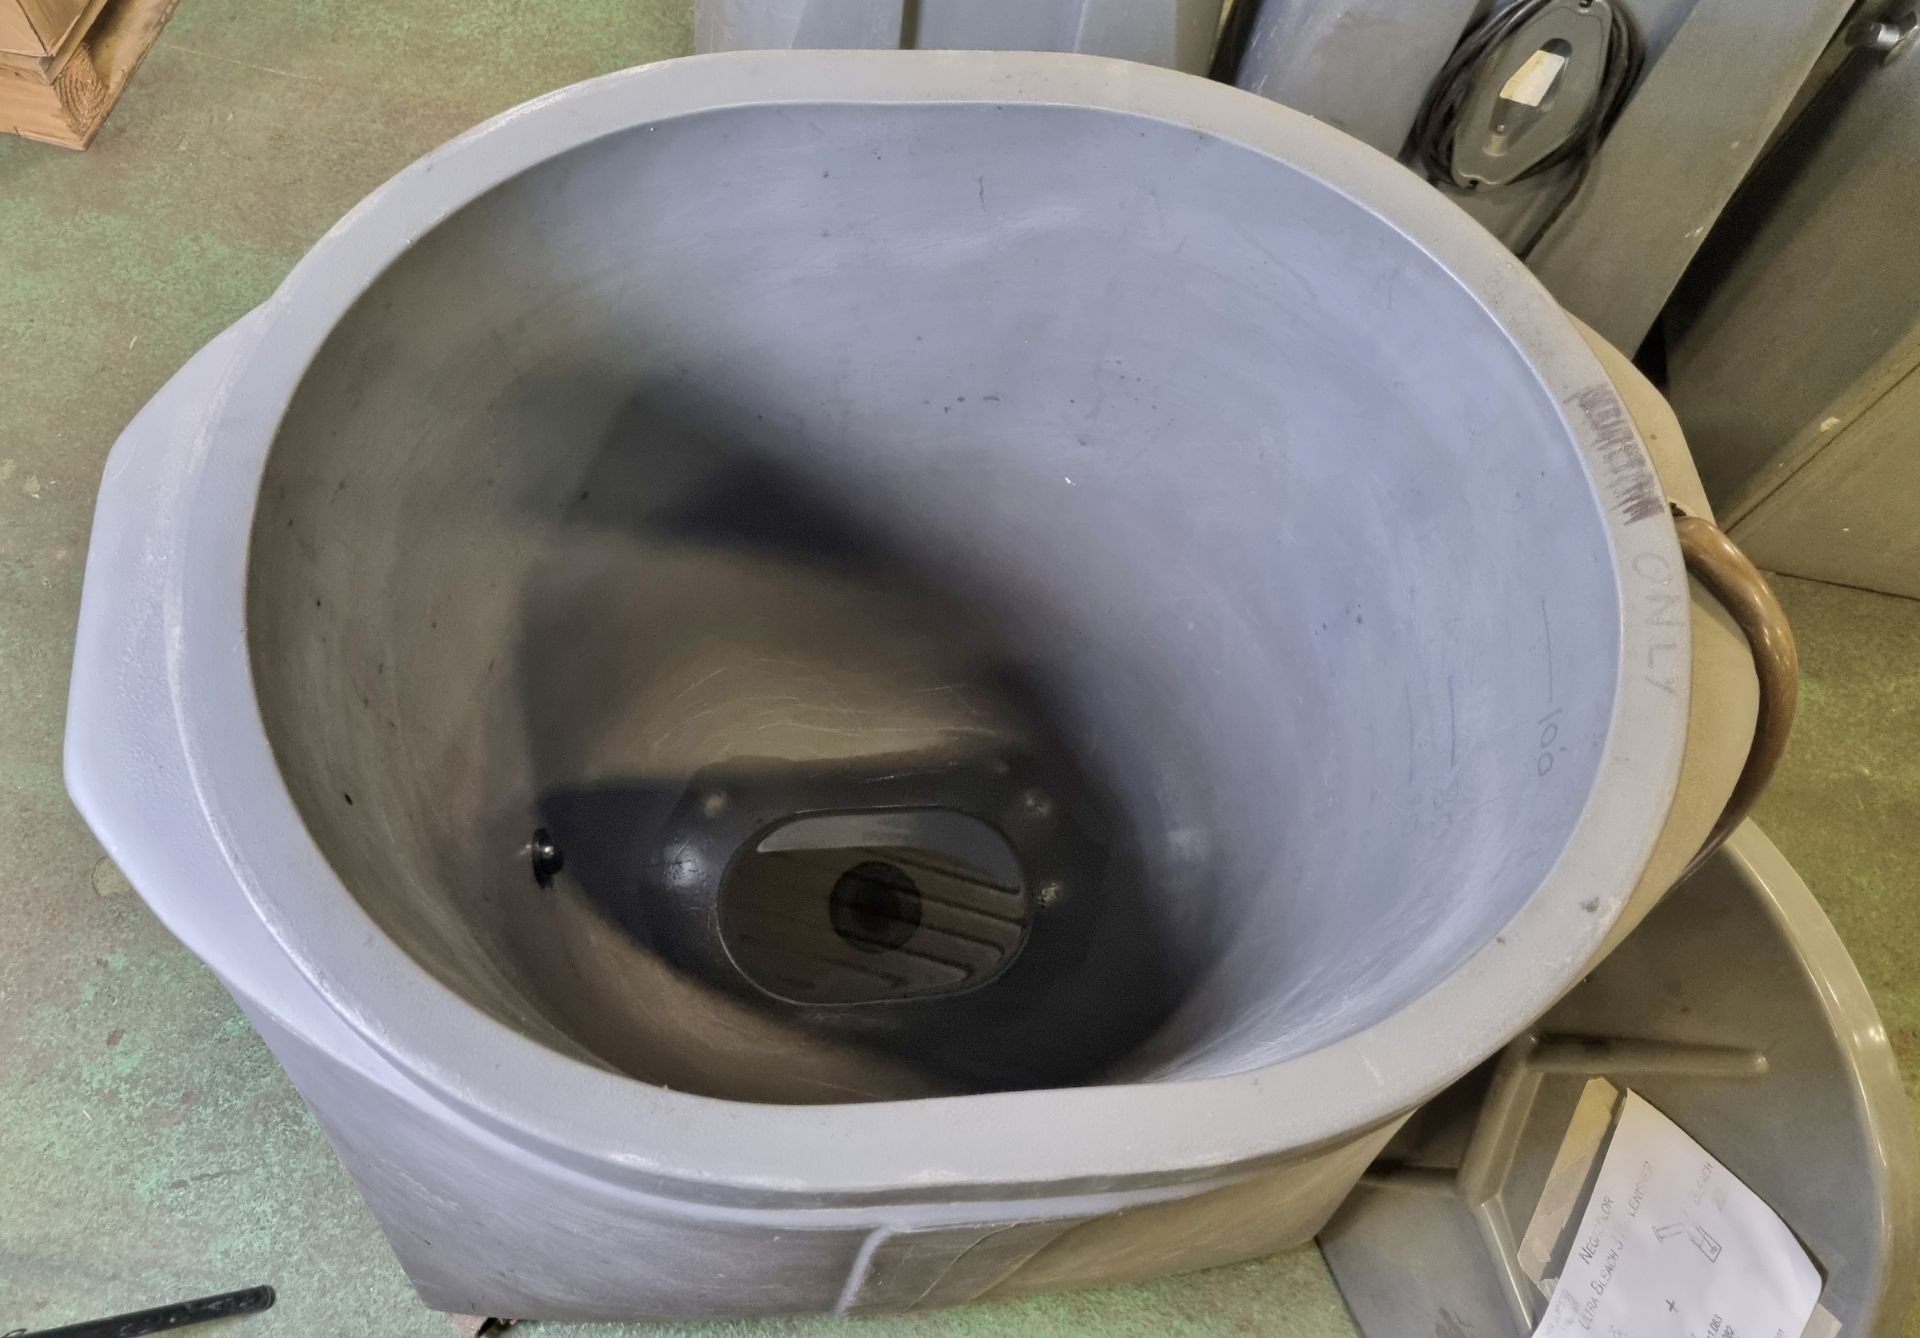 Kreonite Porta-Mix PM25 photographic chemical mixing tank (missing wheel) - 100L capacity - Image 3 of 5